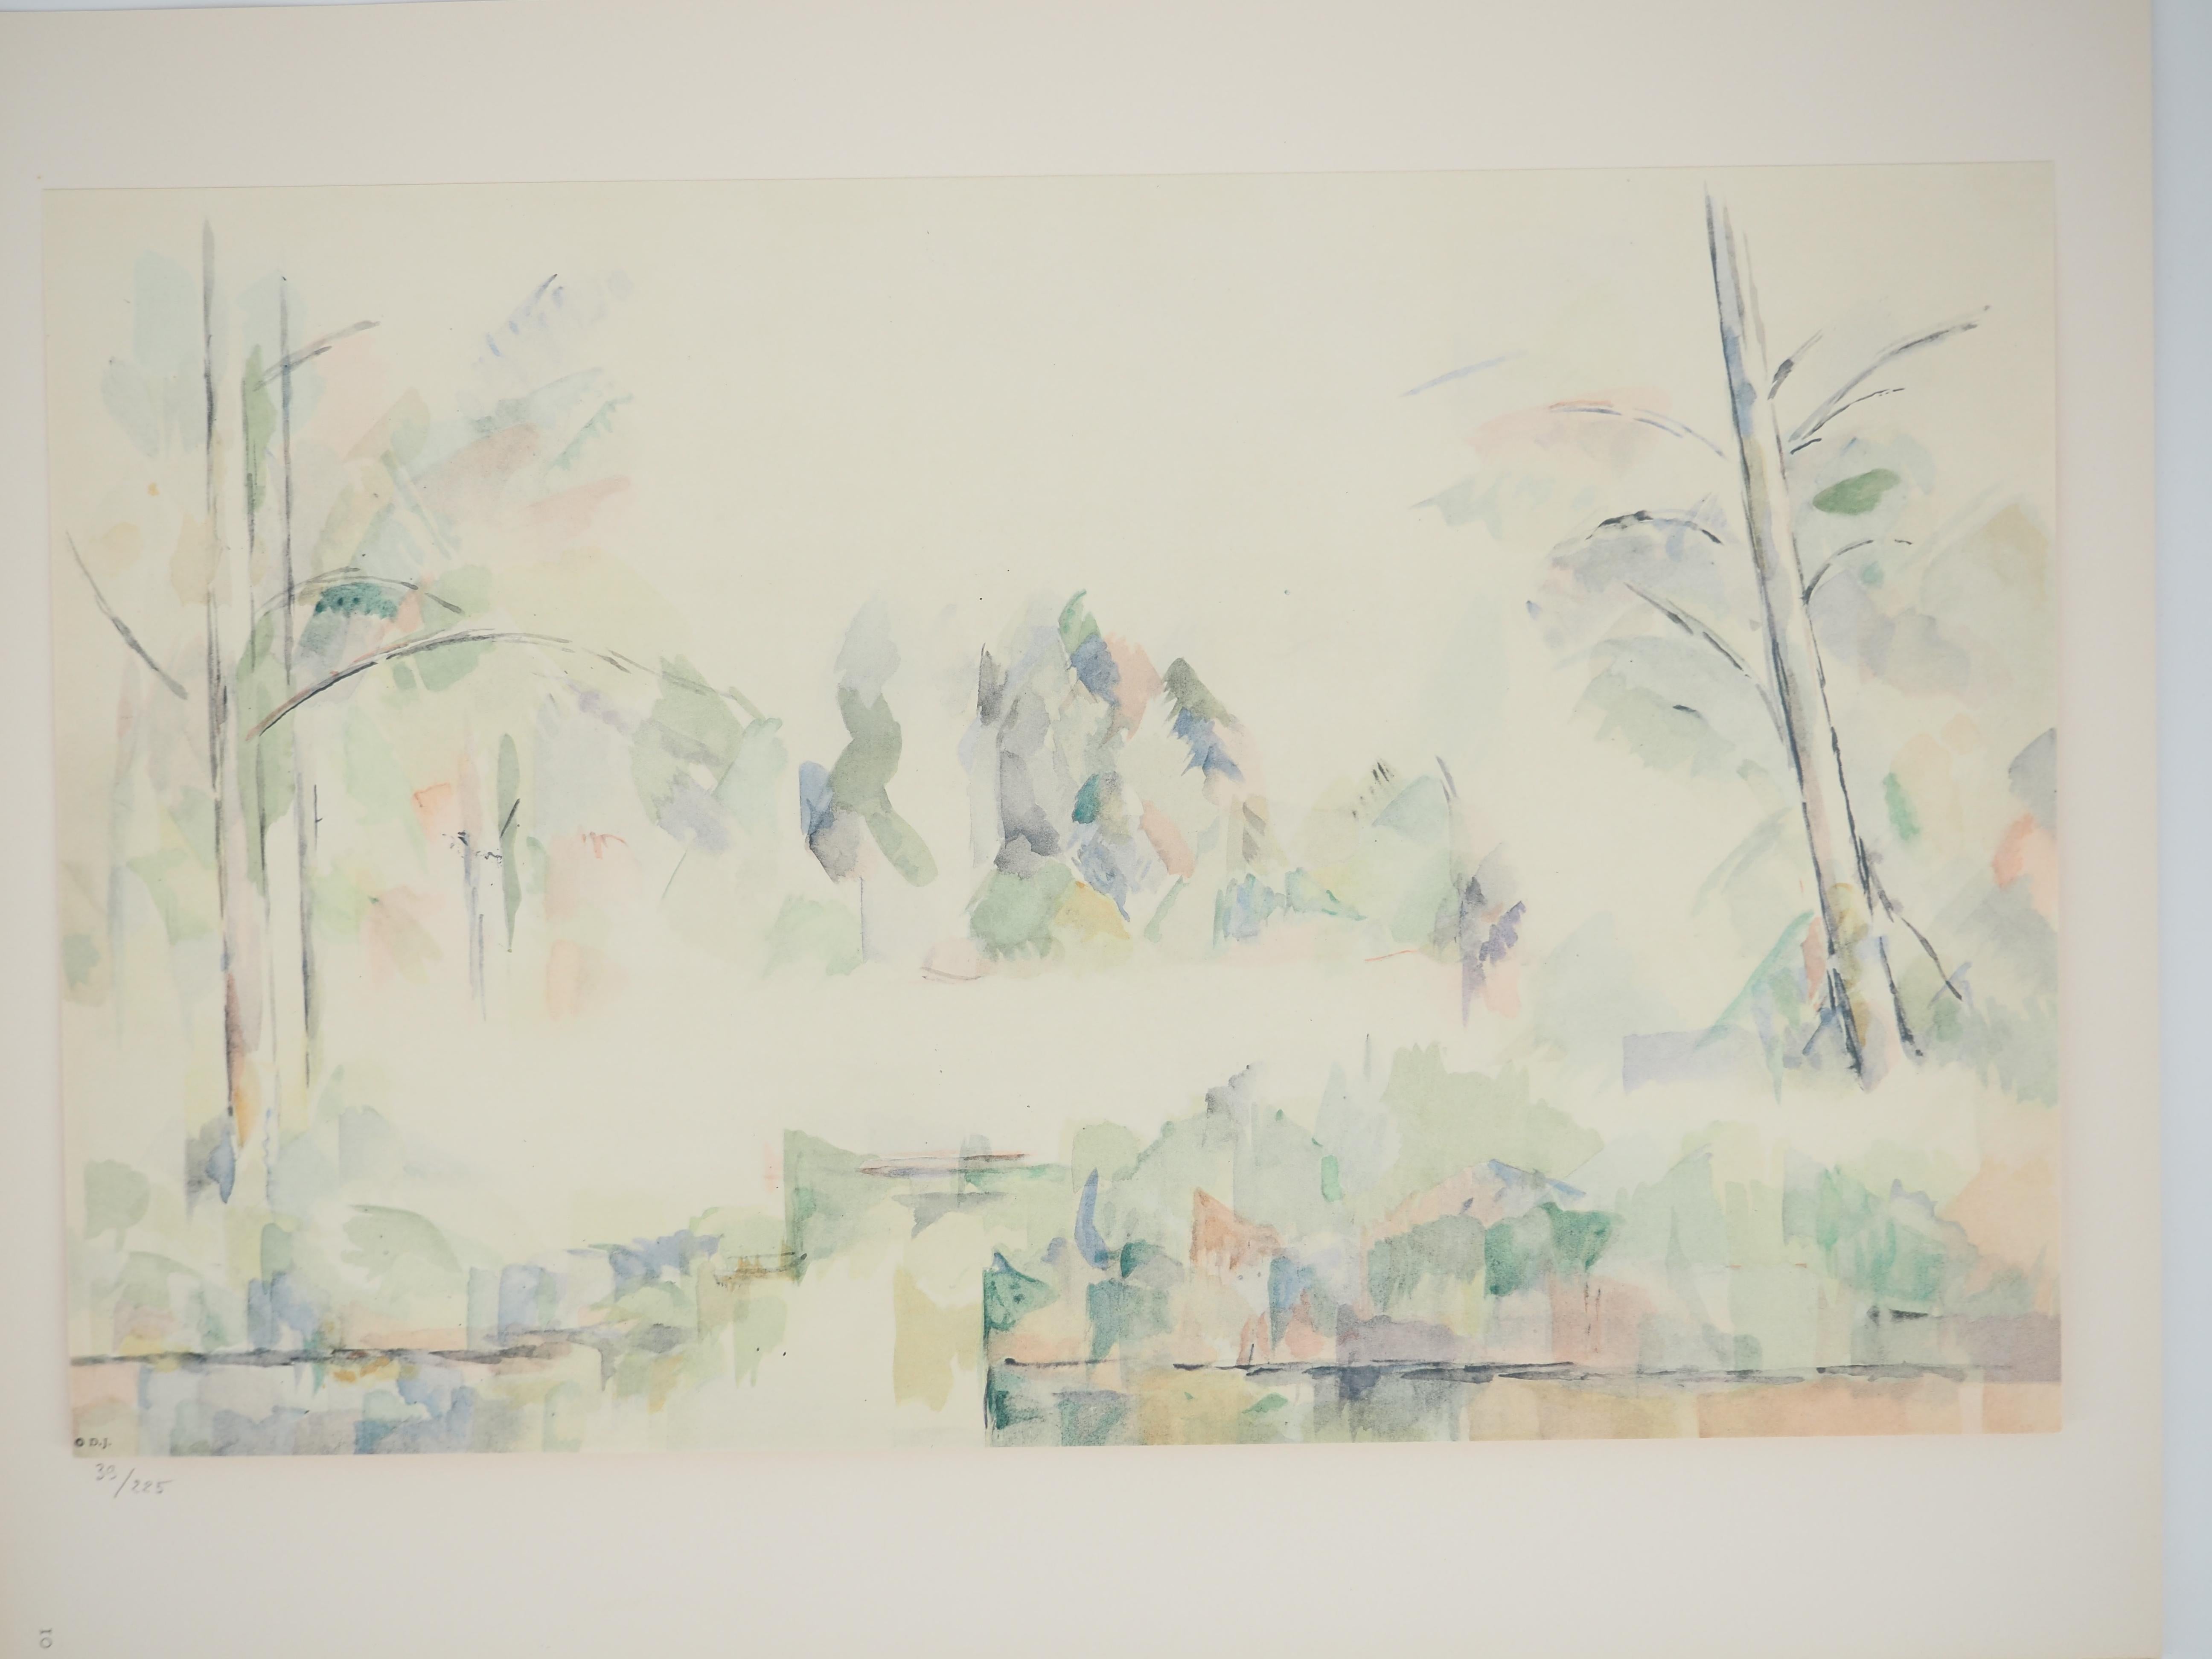 View from de lake - Lithograph, 1971 - Print by Paul Cézanne